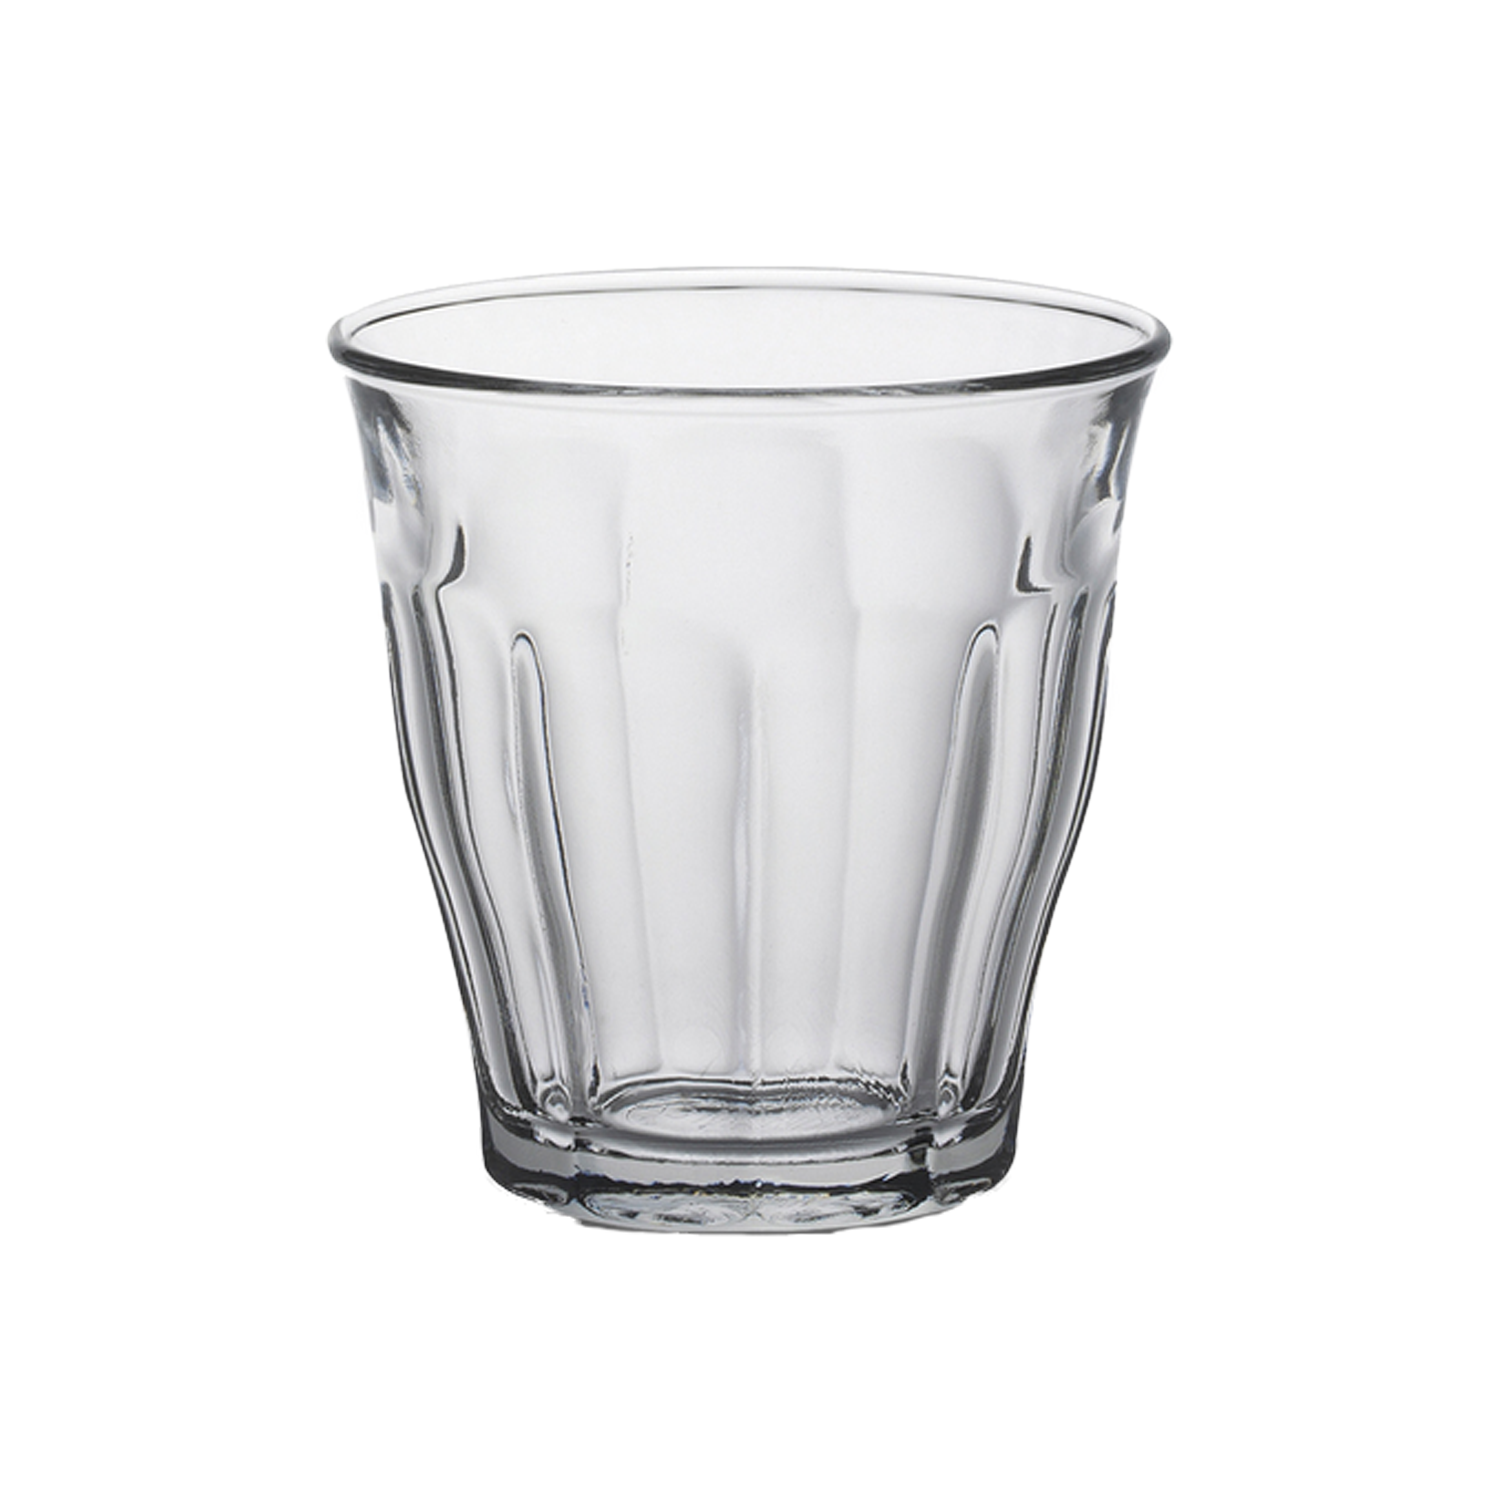 Duralex Picardie Glass 160ml